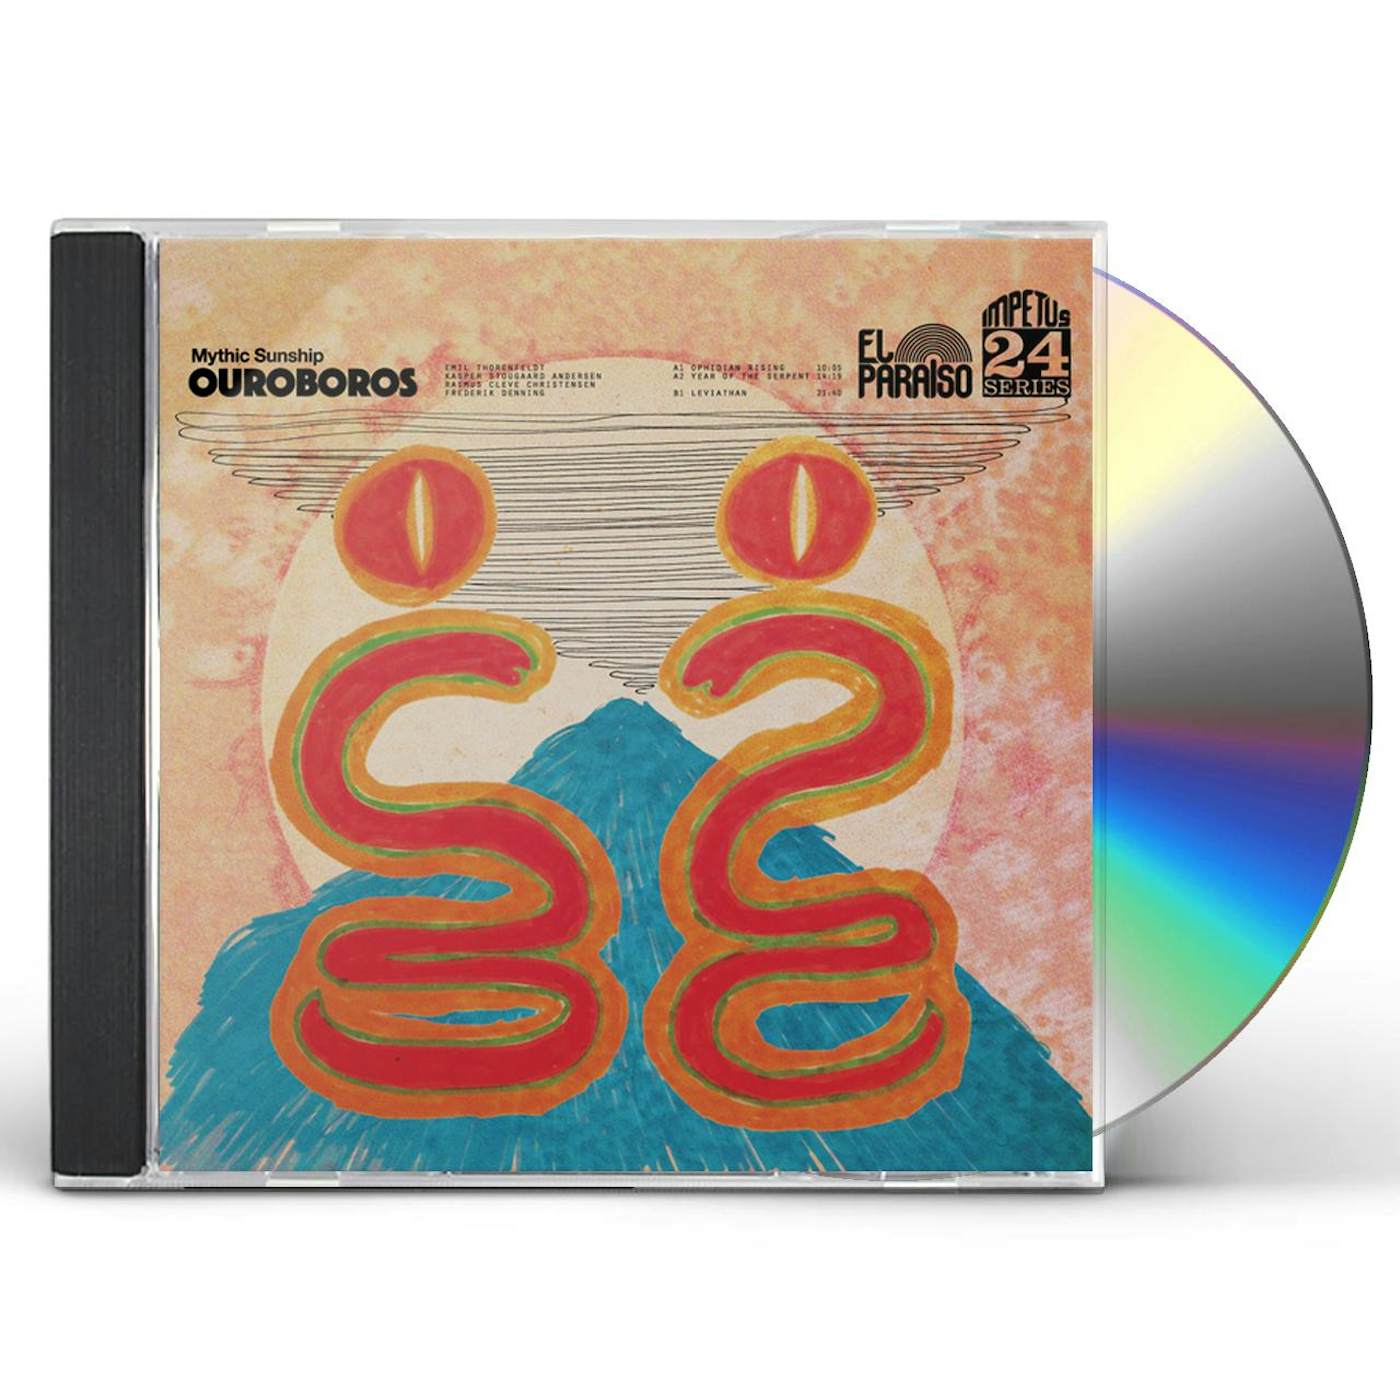 Mythic Sunship OUROBOROS CD